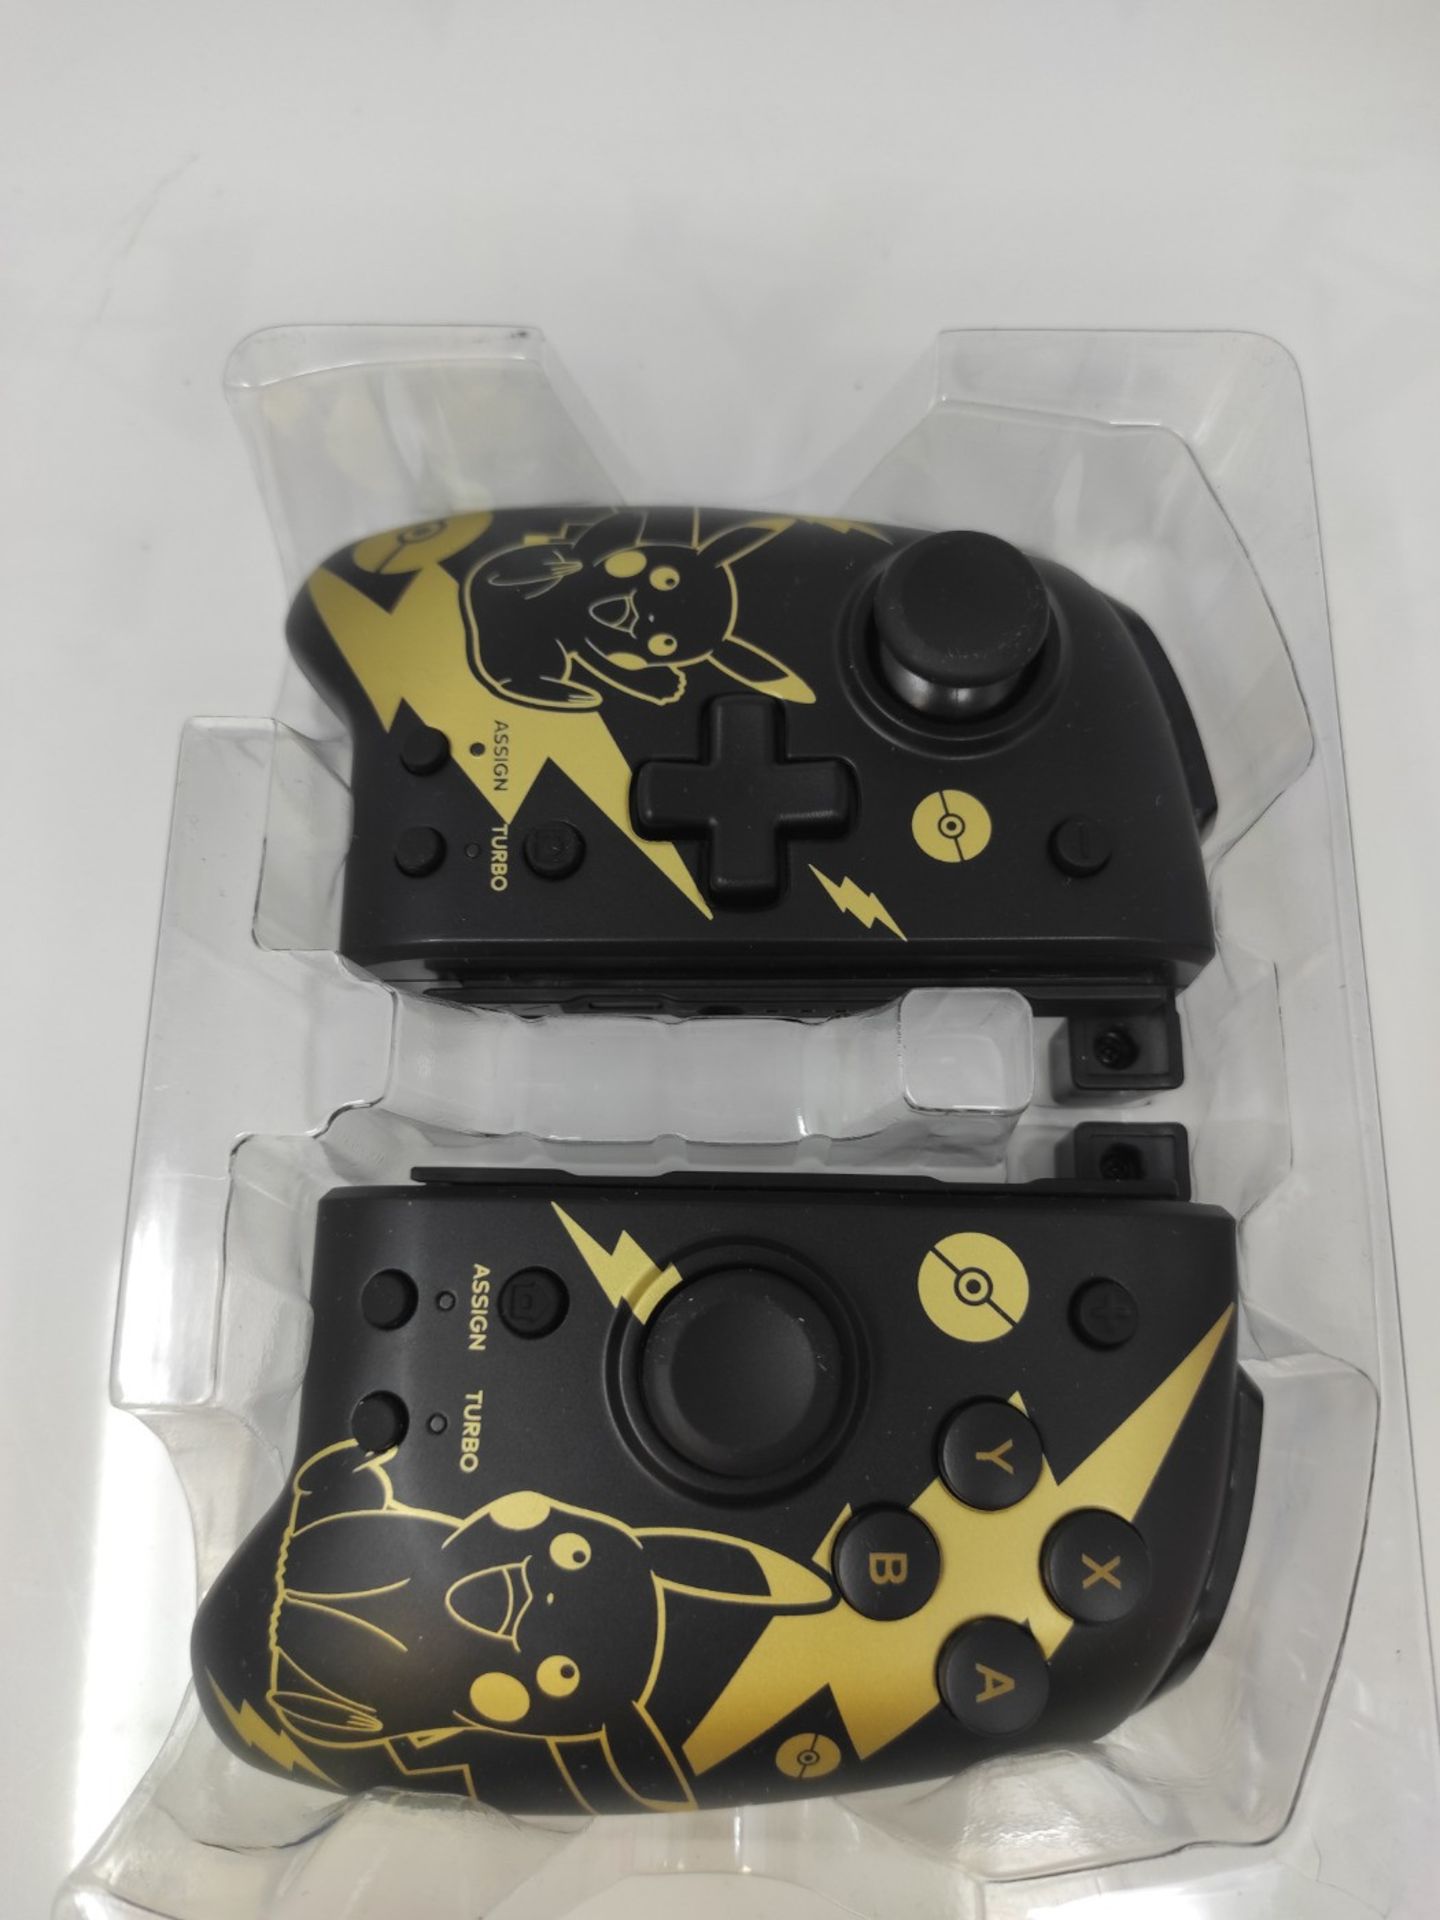 HORI - Split Pad Pro Pikachu Black & Gold Controller (Nintendo Switch) - Image 3 of 3